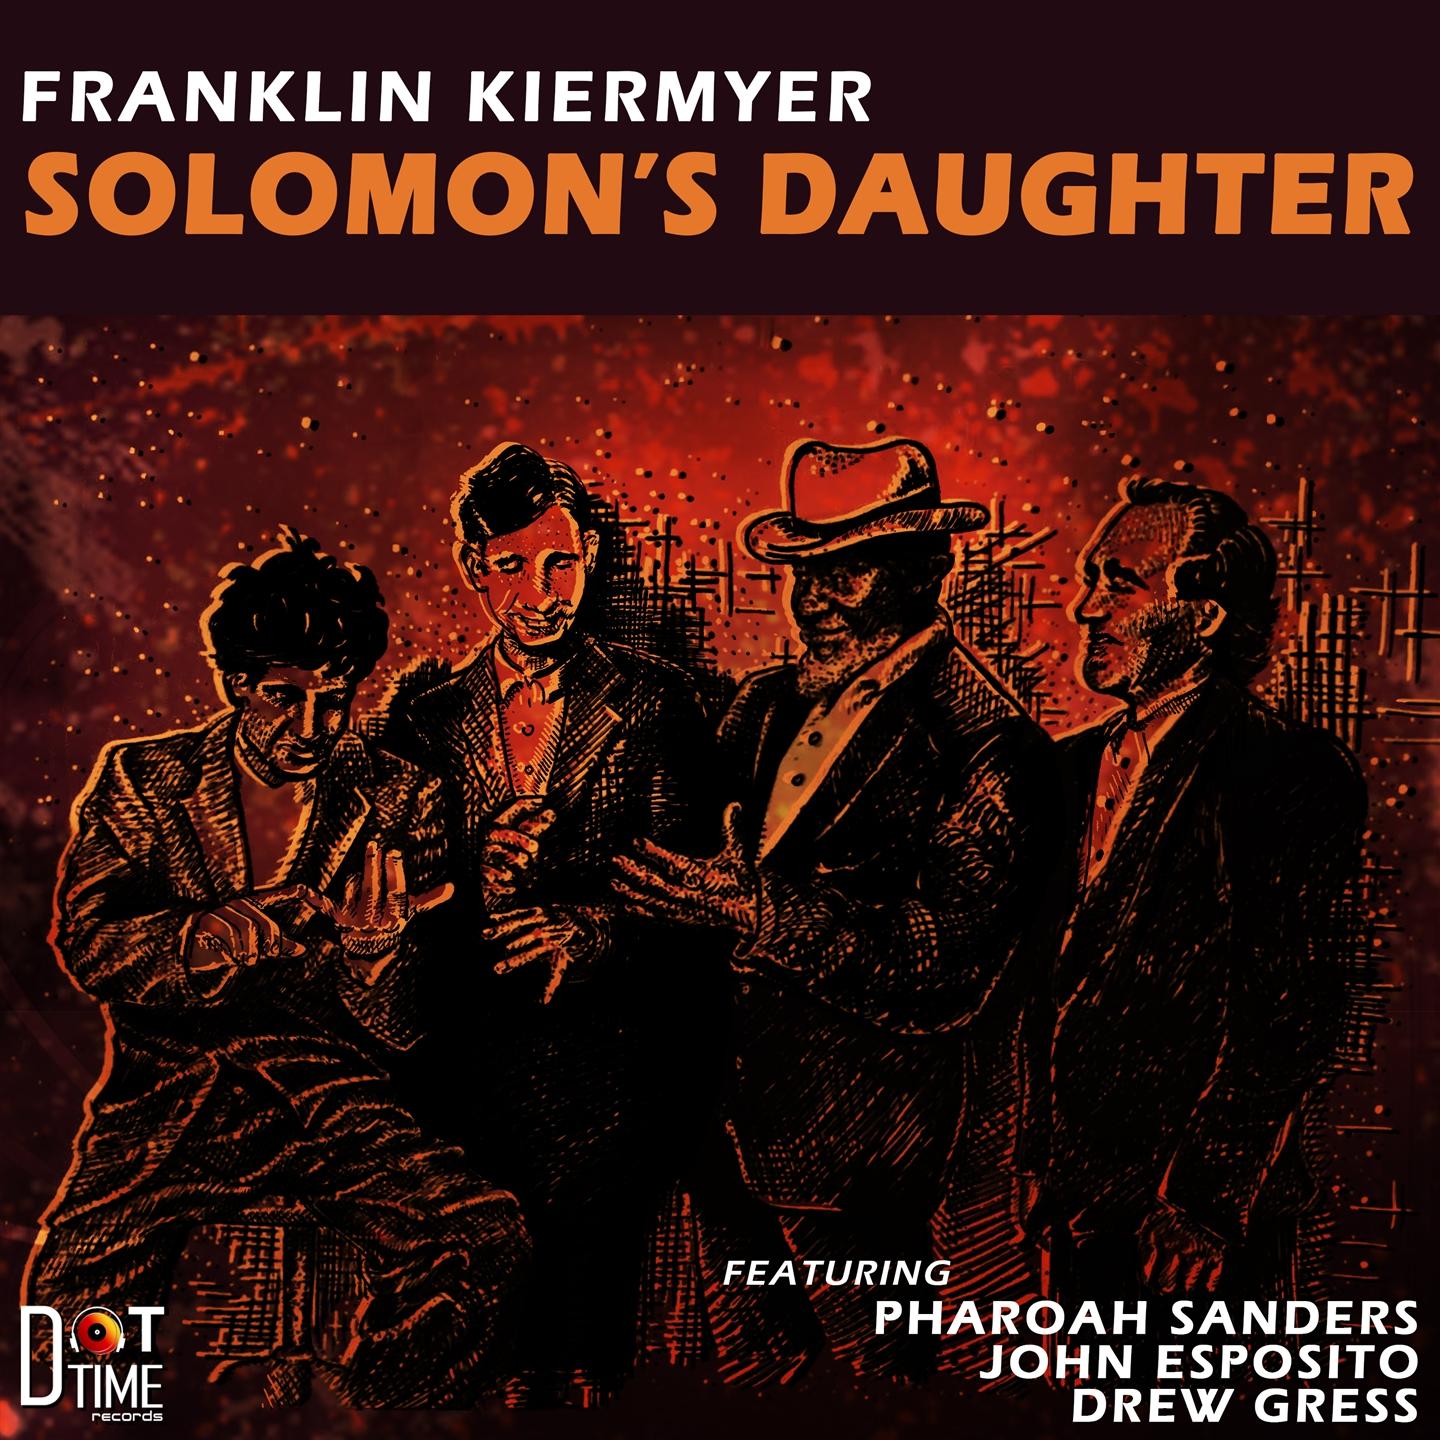 SOLOMON'S DAUGHTER